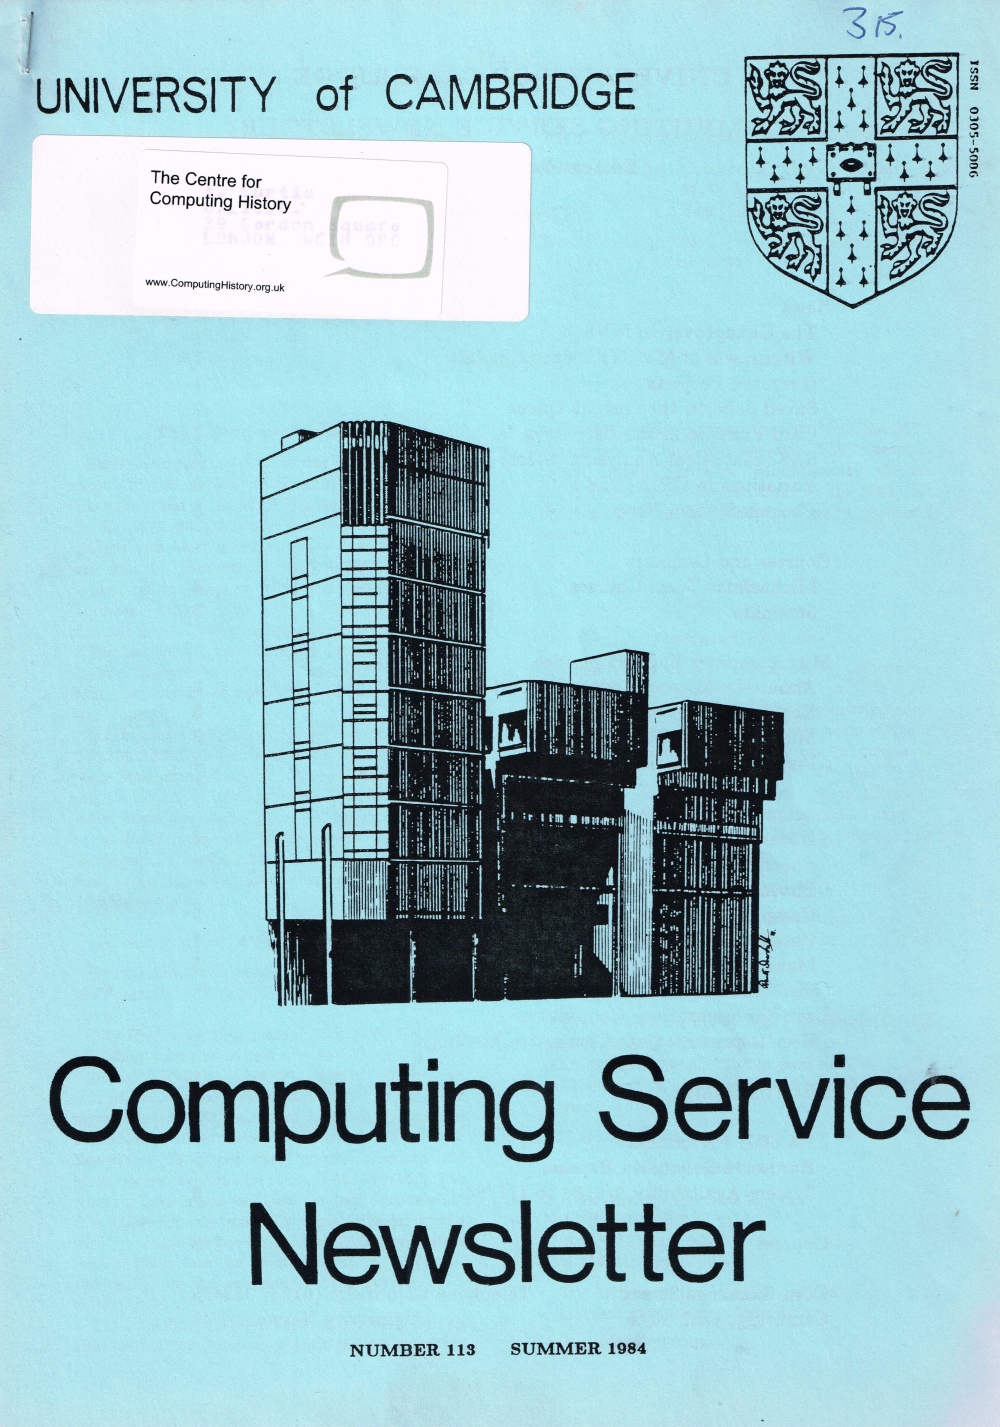 Article: University of Cambridge Computing Service Summer 1984 Newsletter 113